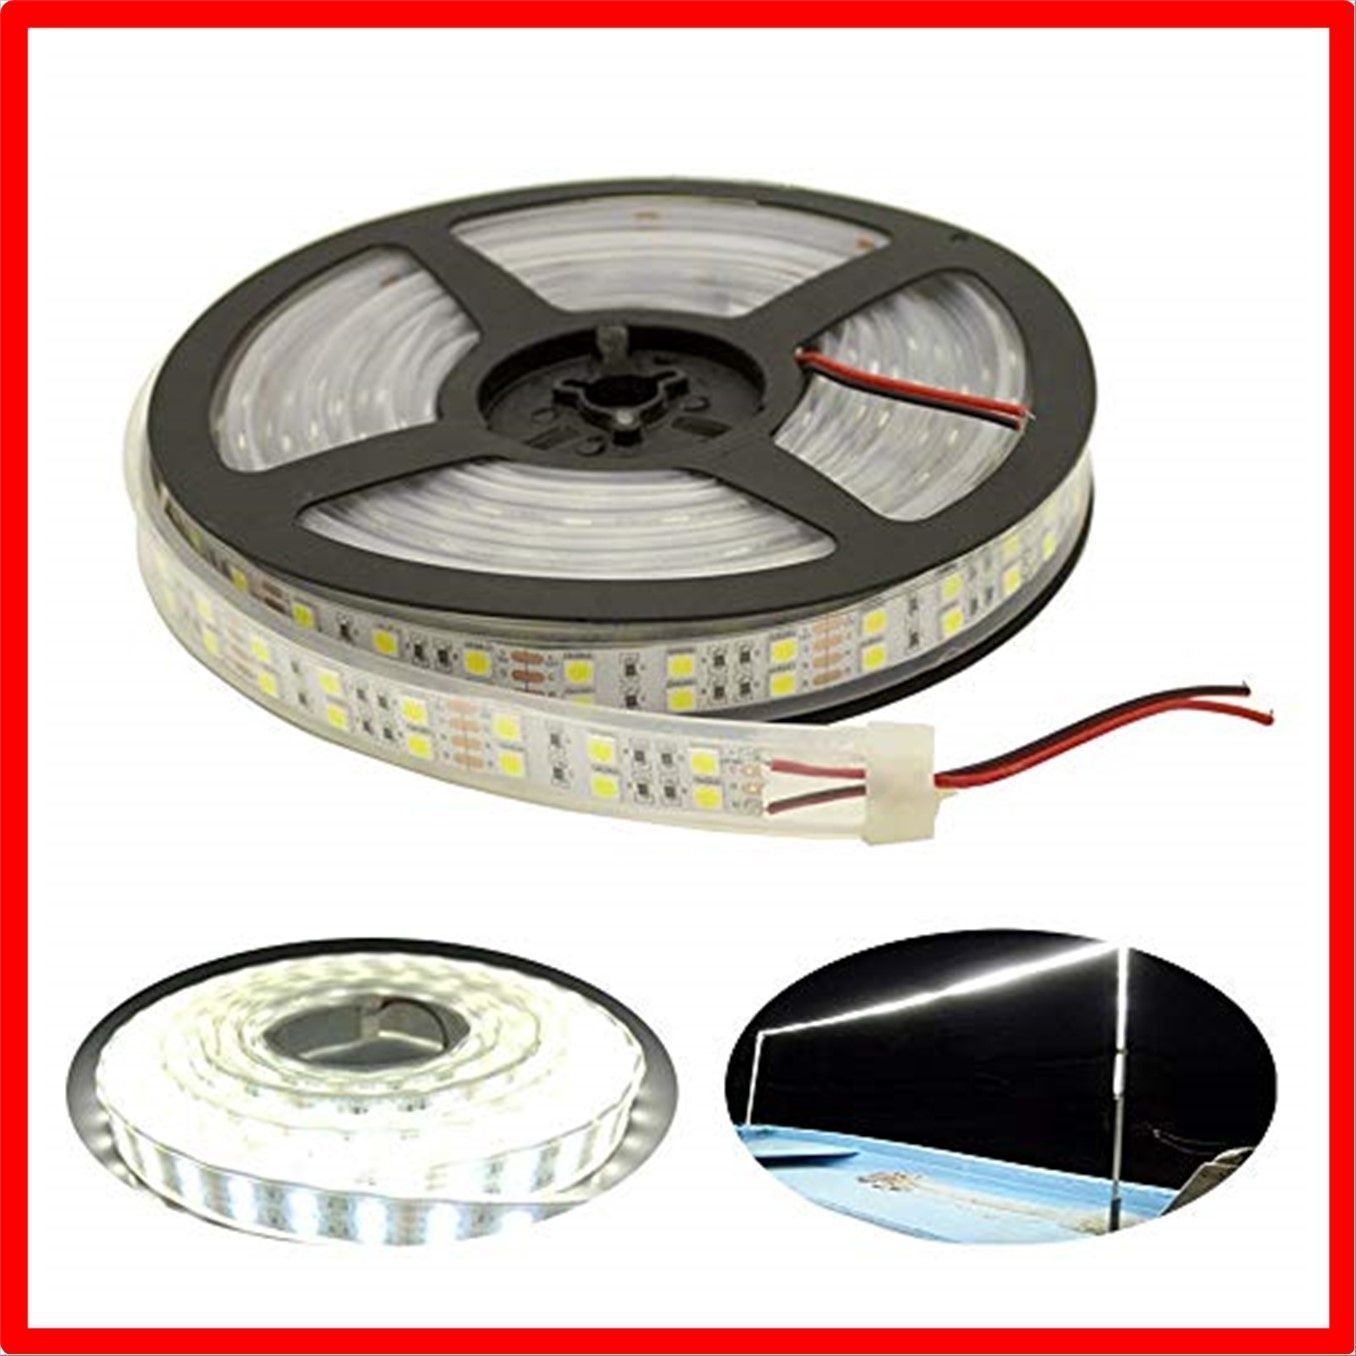 LEDテープライト ホワイト 5m SMD5050 切断可能 2列 600連 白